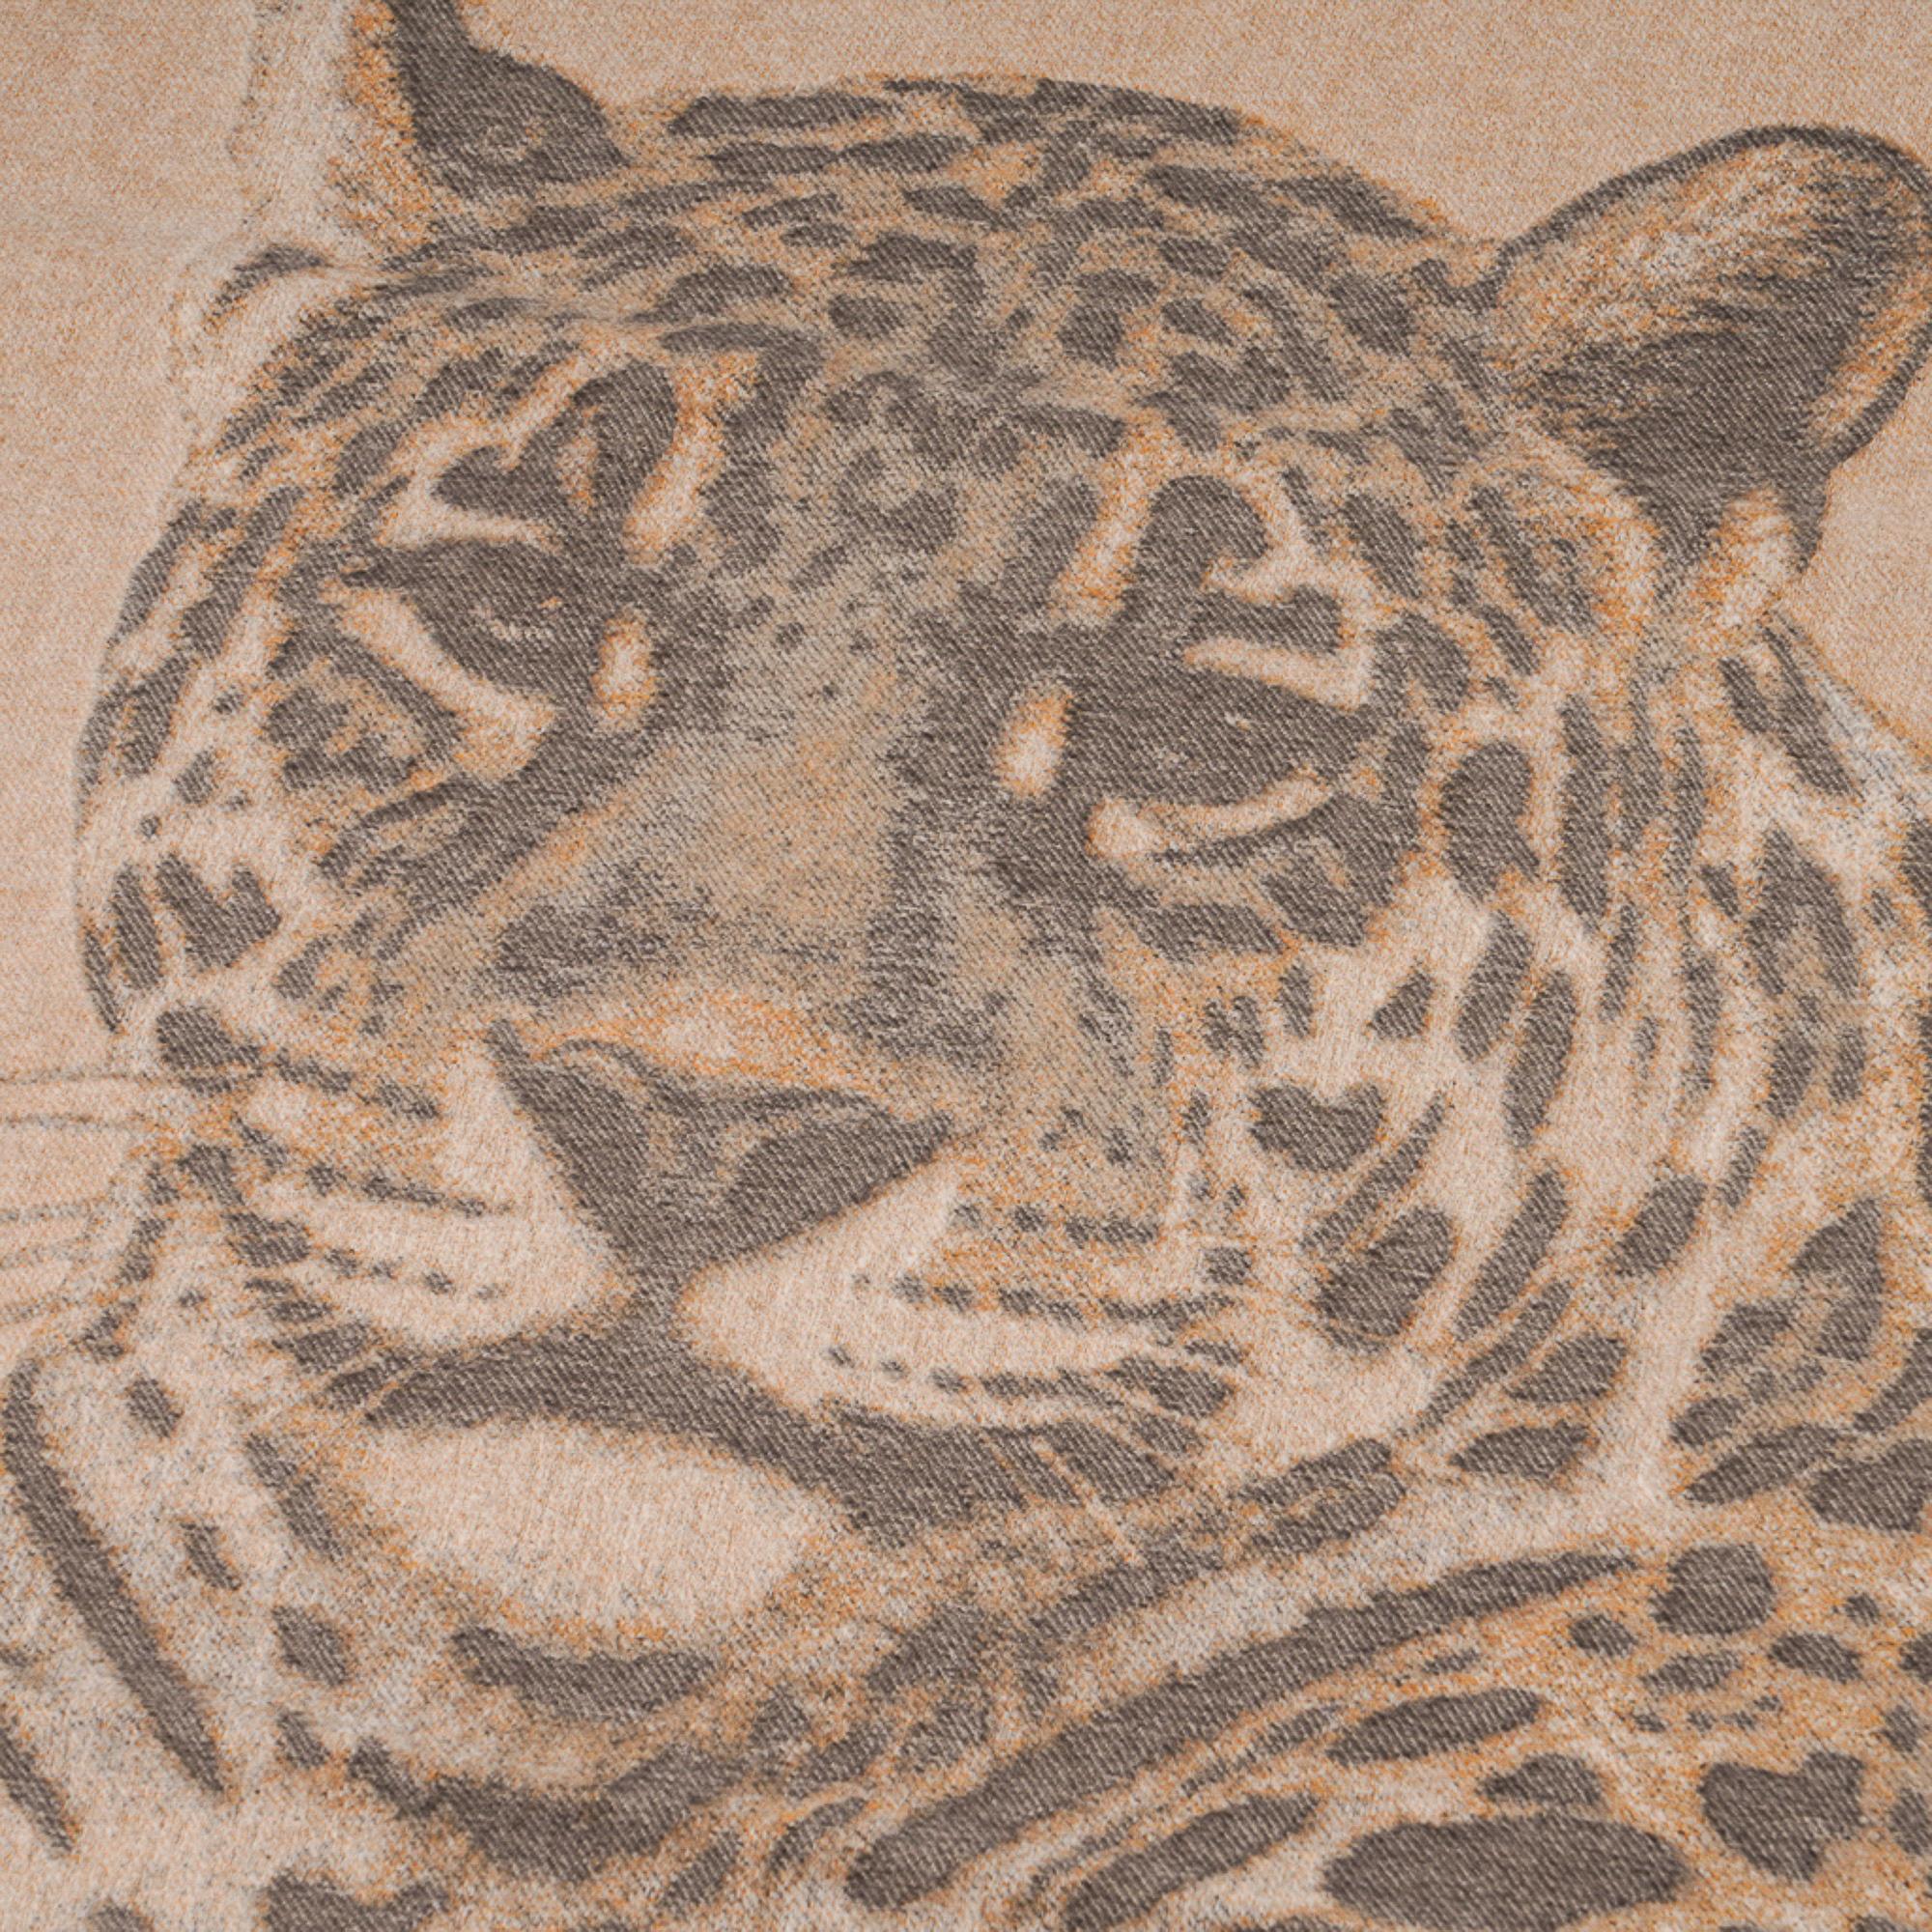 hermes leopard blanket